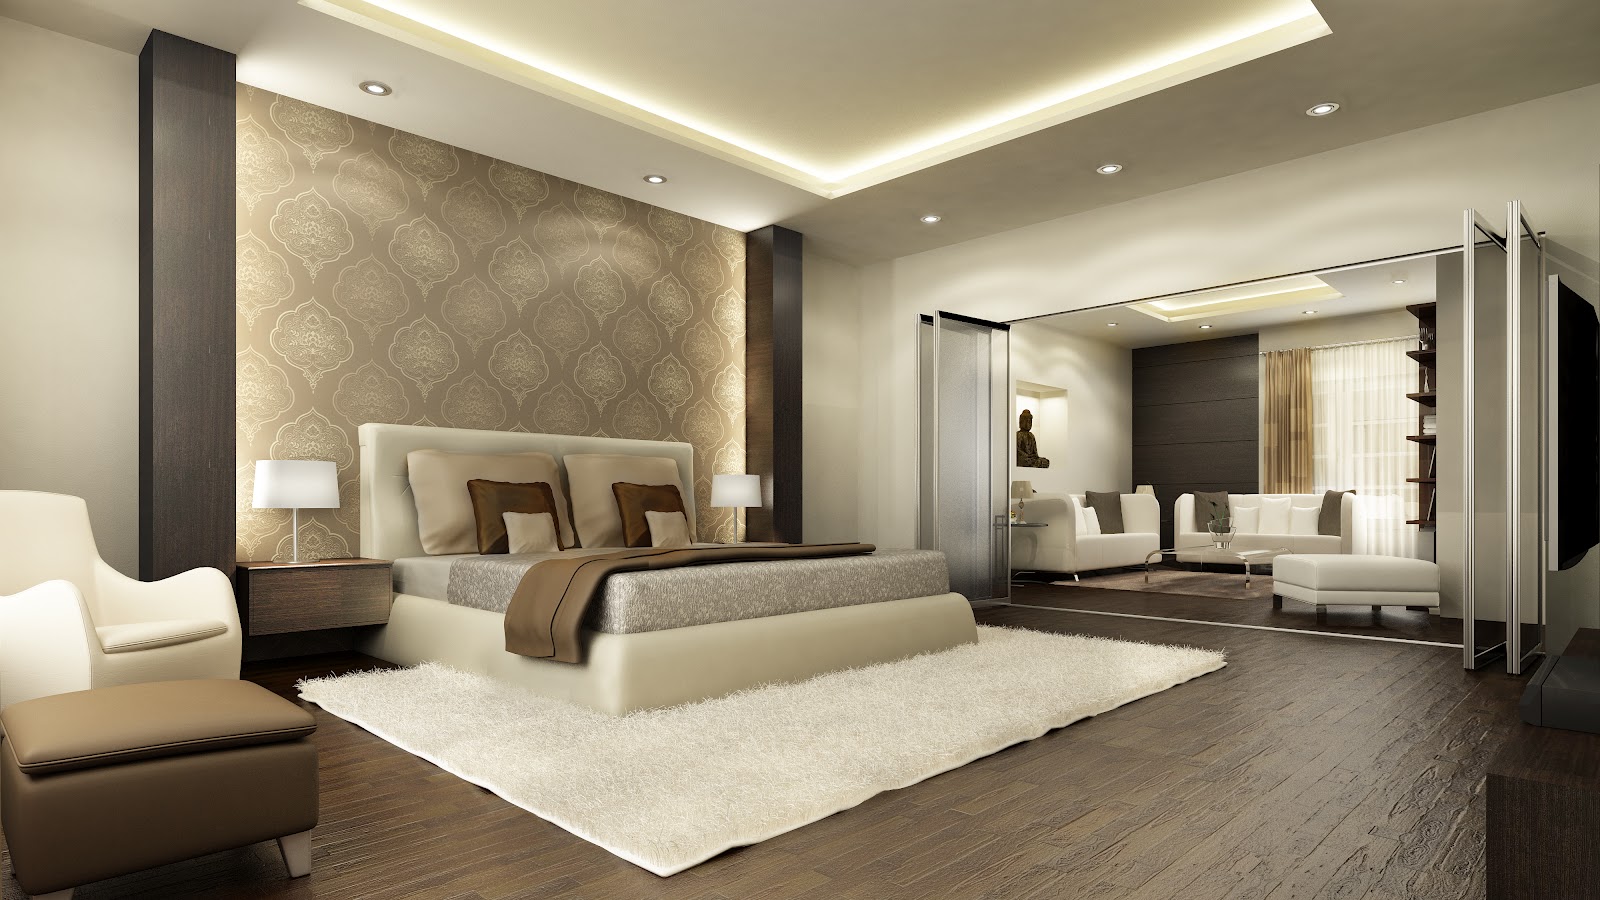 interior-design-ideas-bedroom-shabby-chic